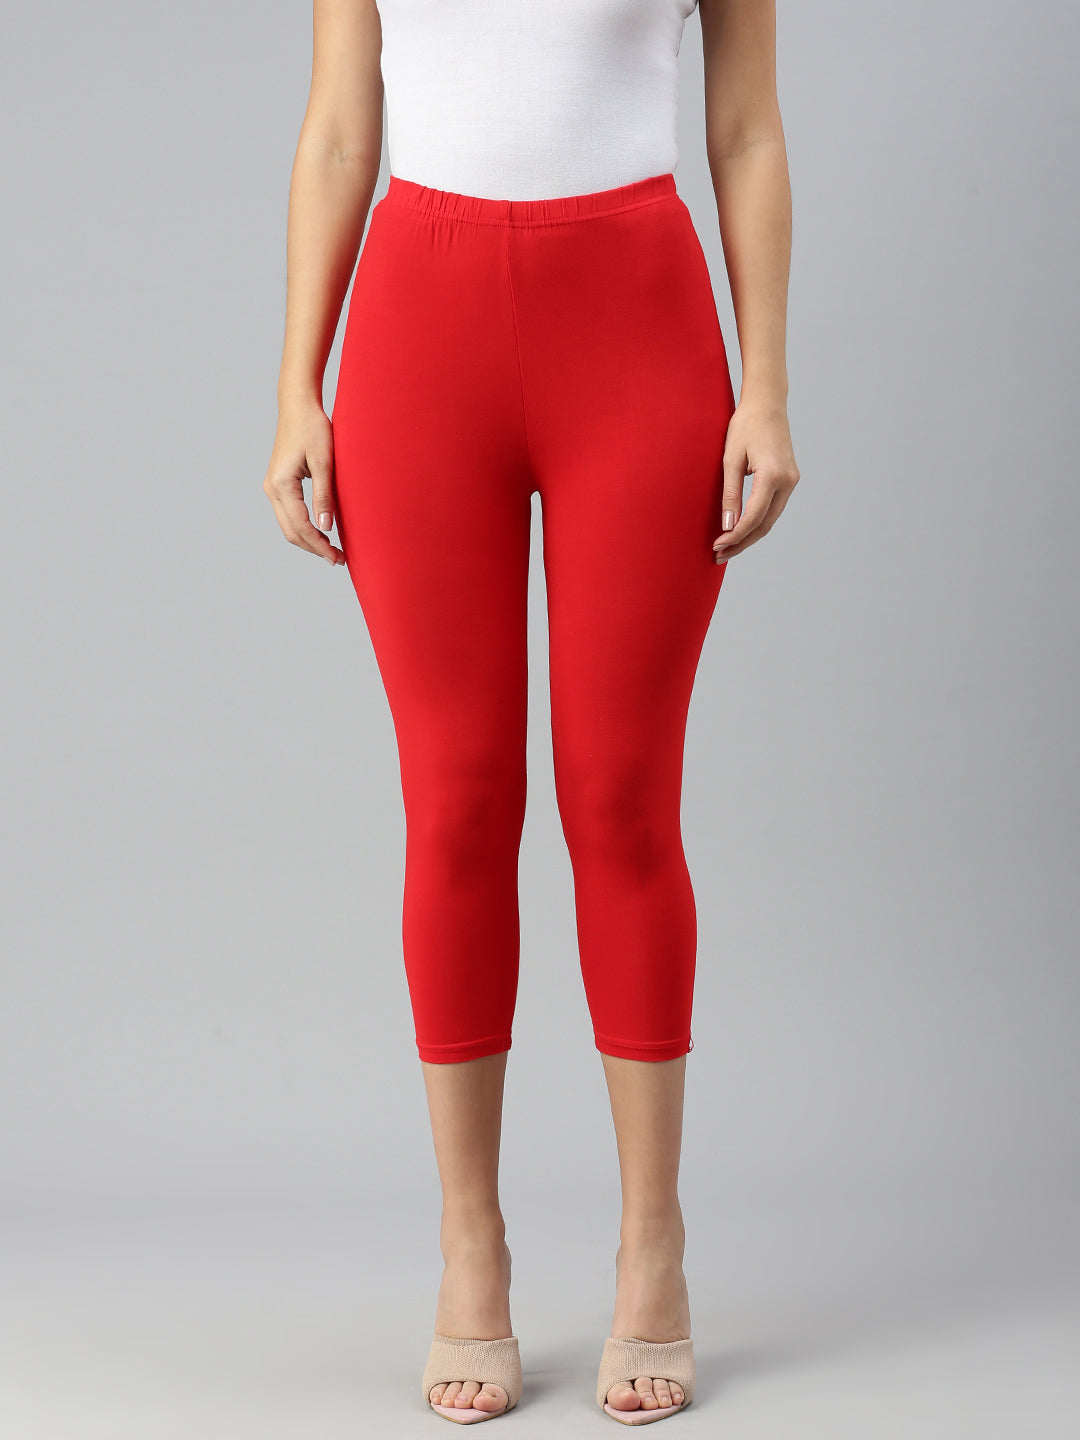 Shop Prisma's Red Capri Leggings for Comfortable and Stylish